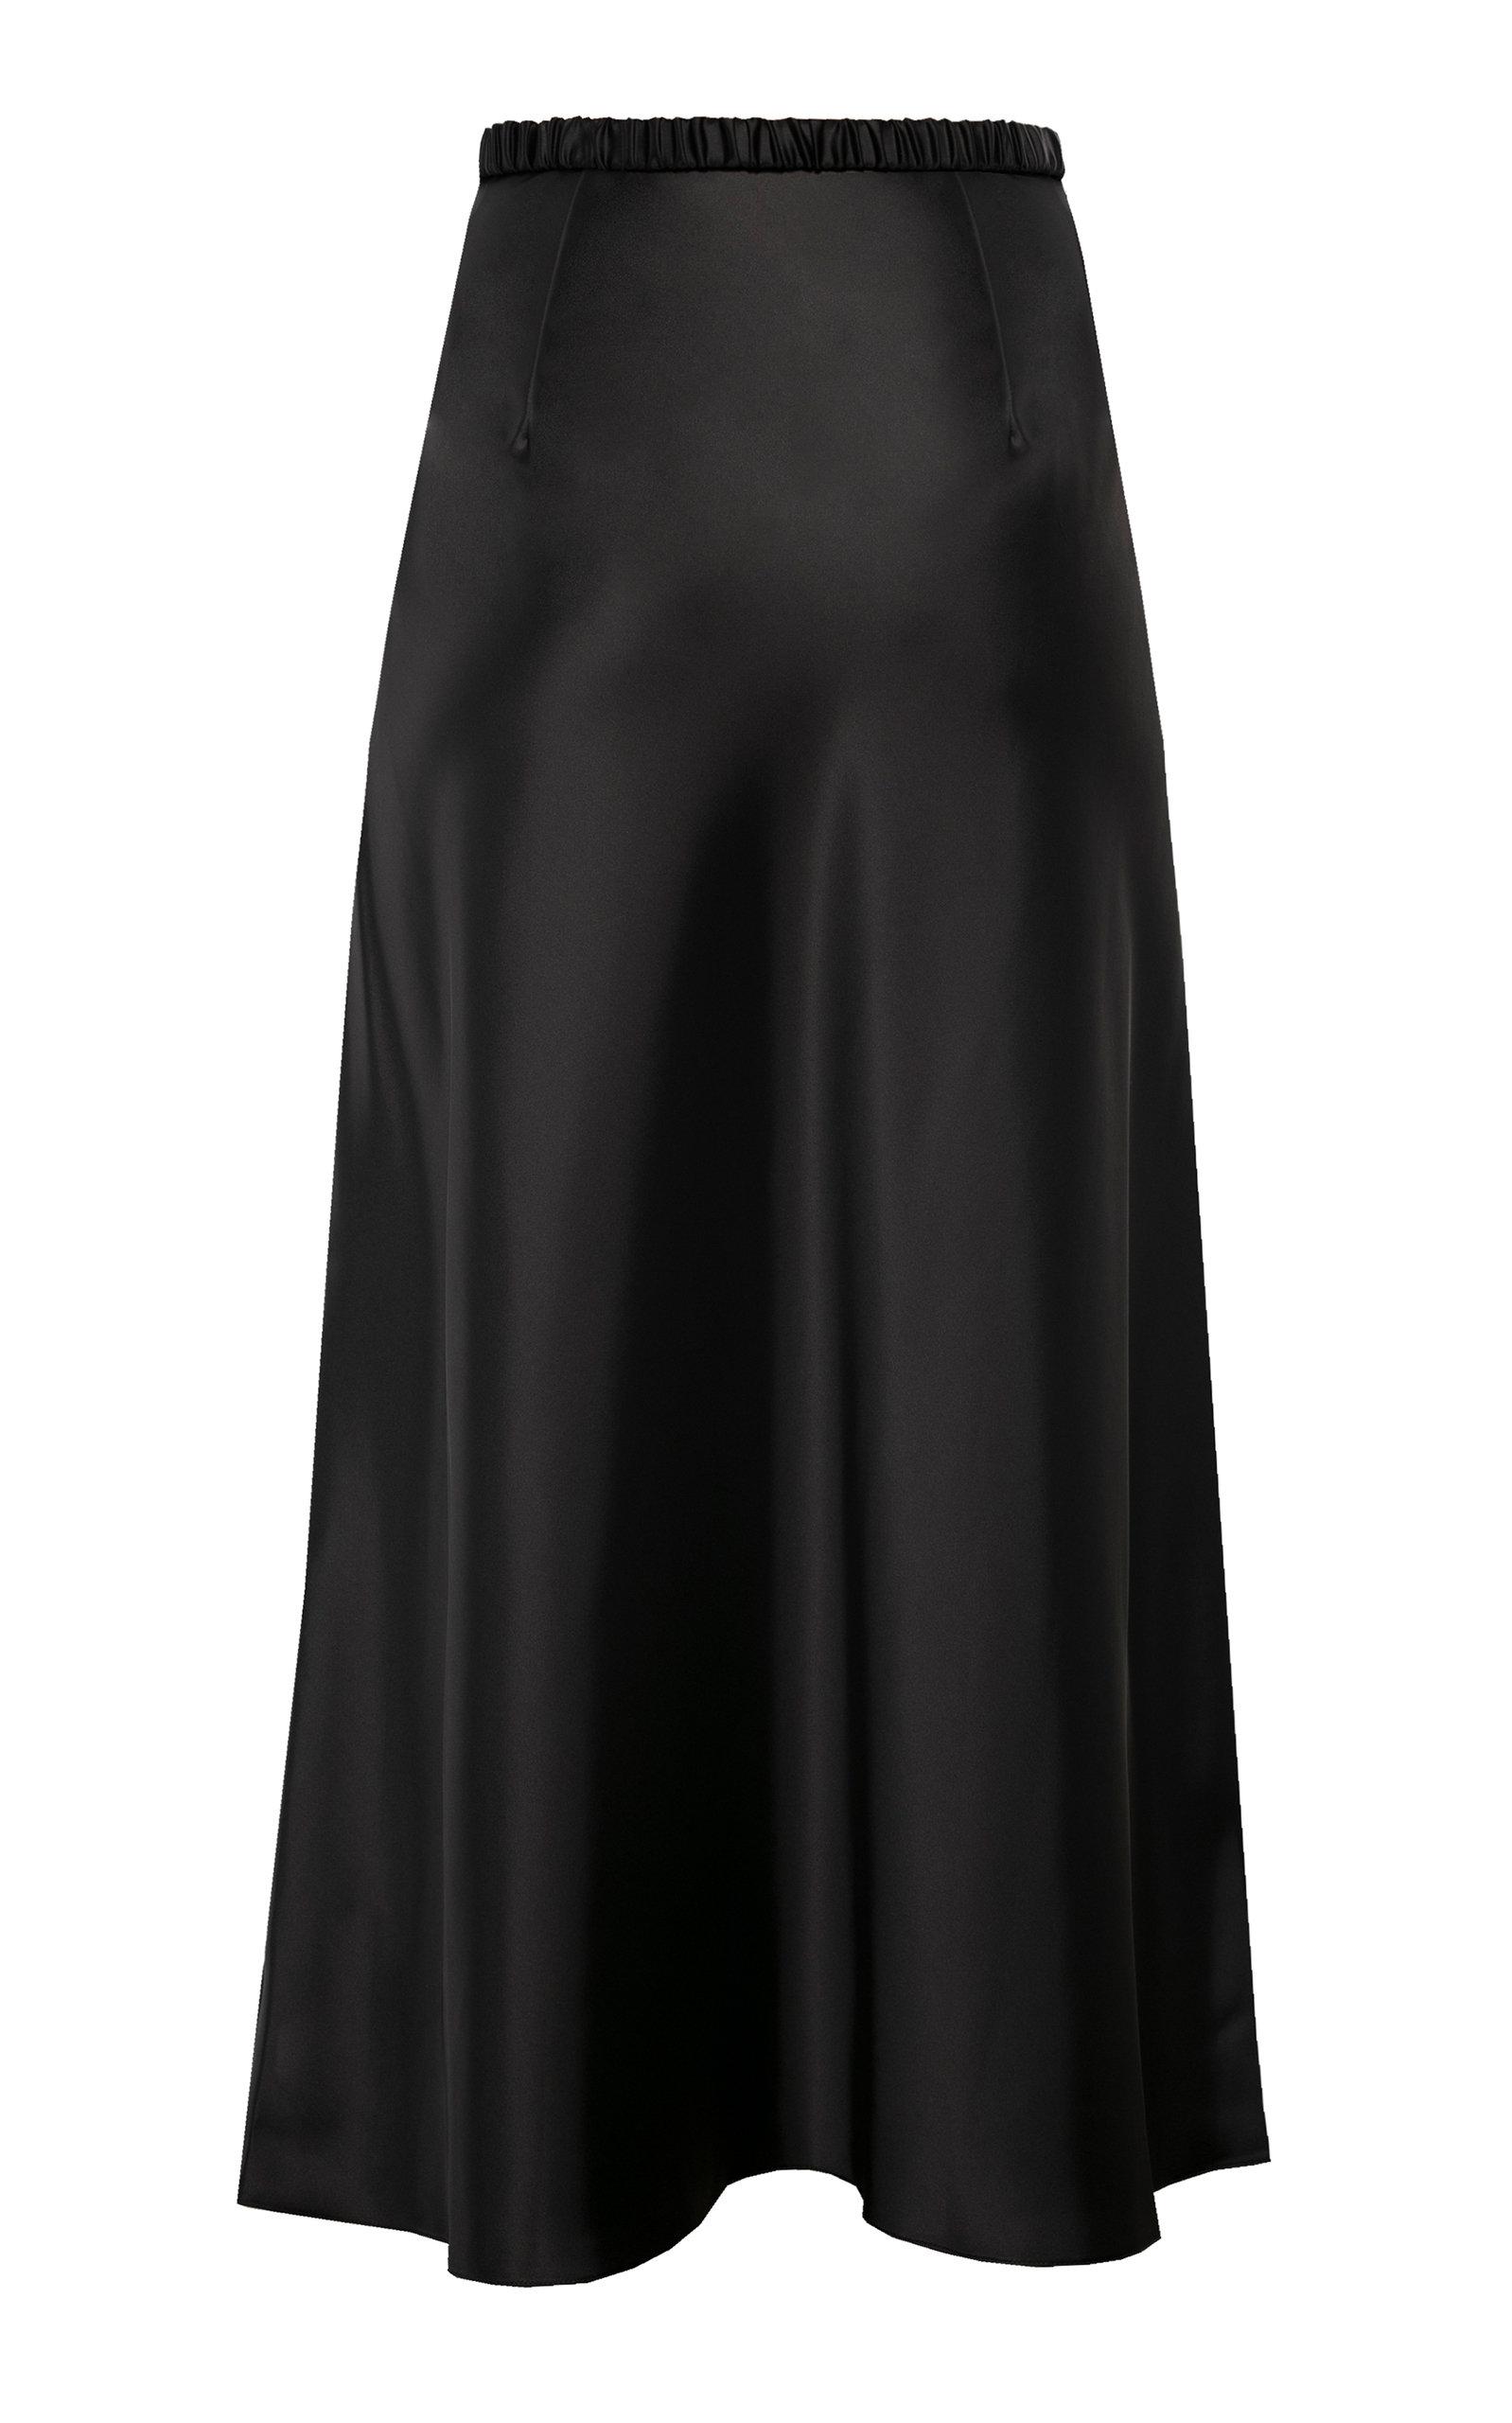 Anna October Dido Satin Midi Skirt in Black - Lyst